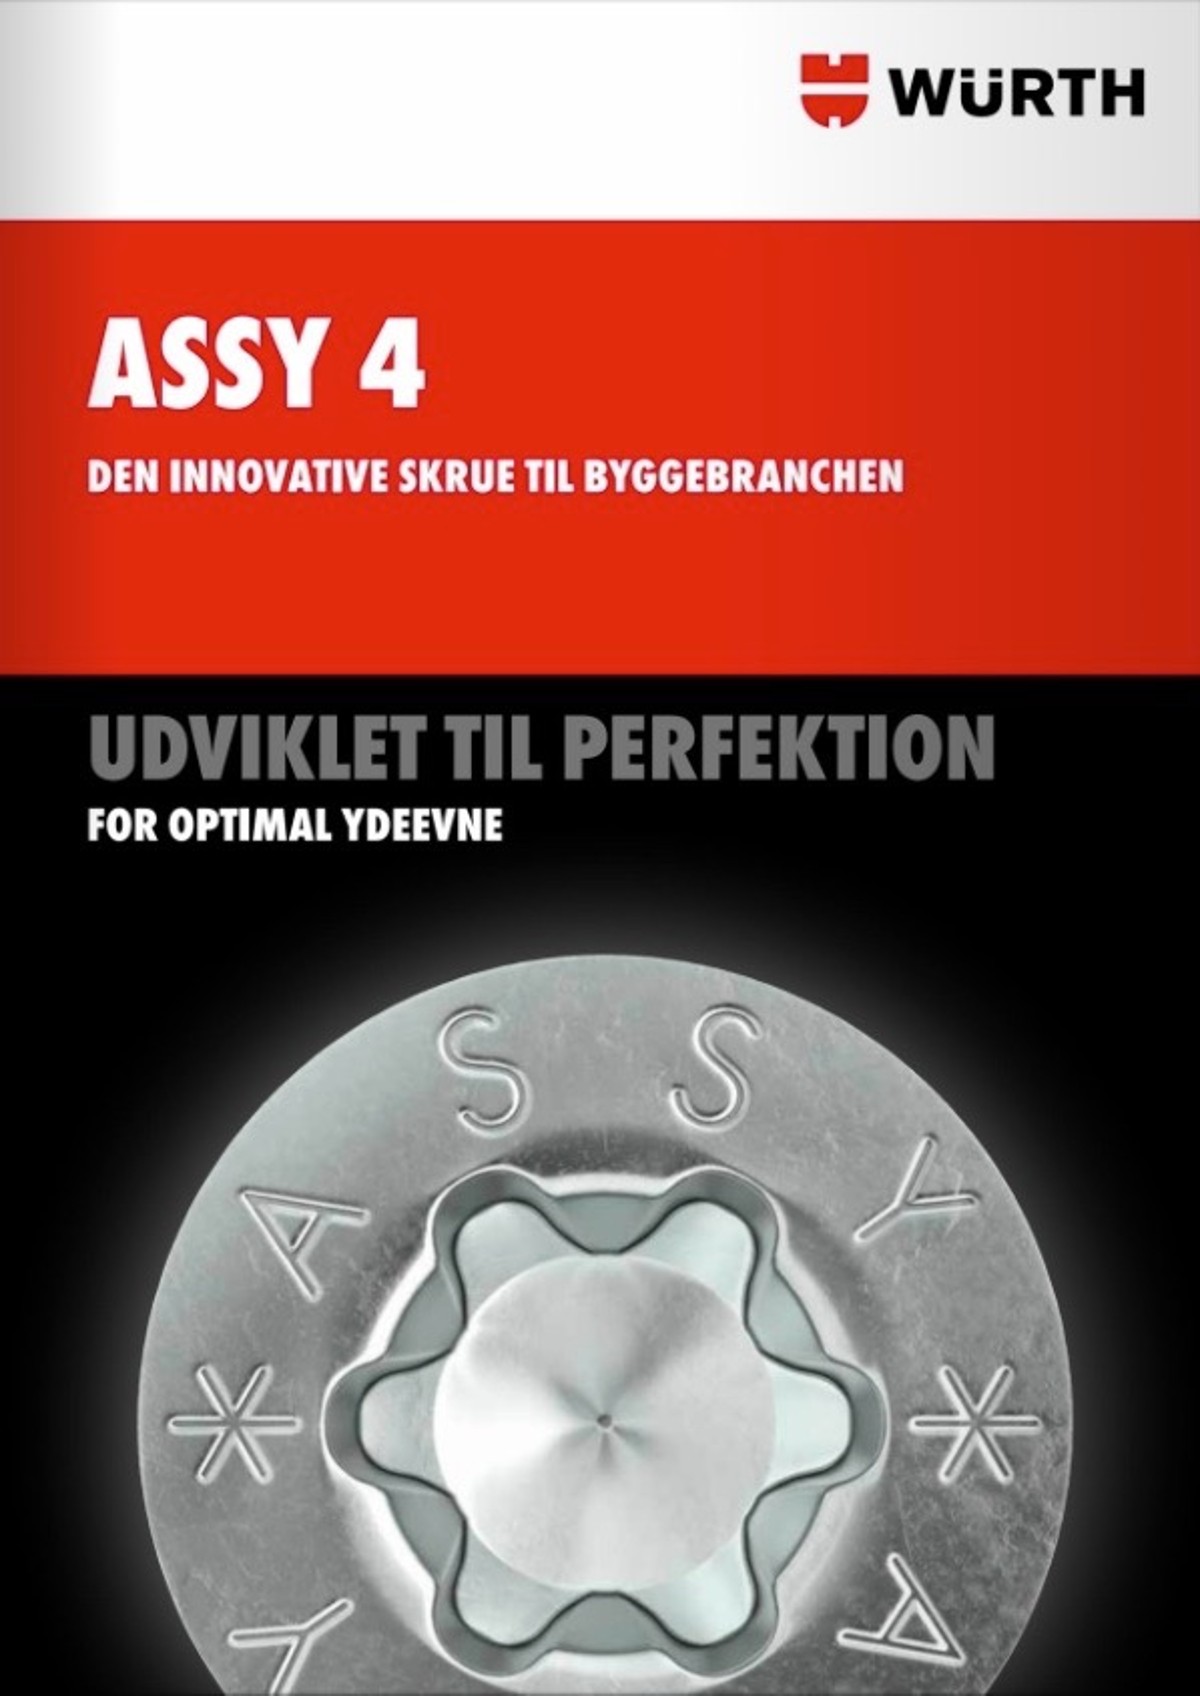 ASSY 4 